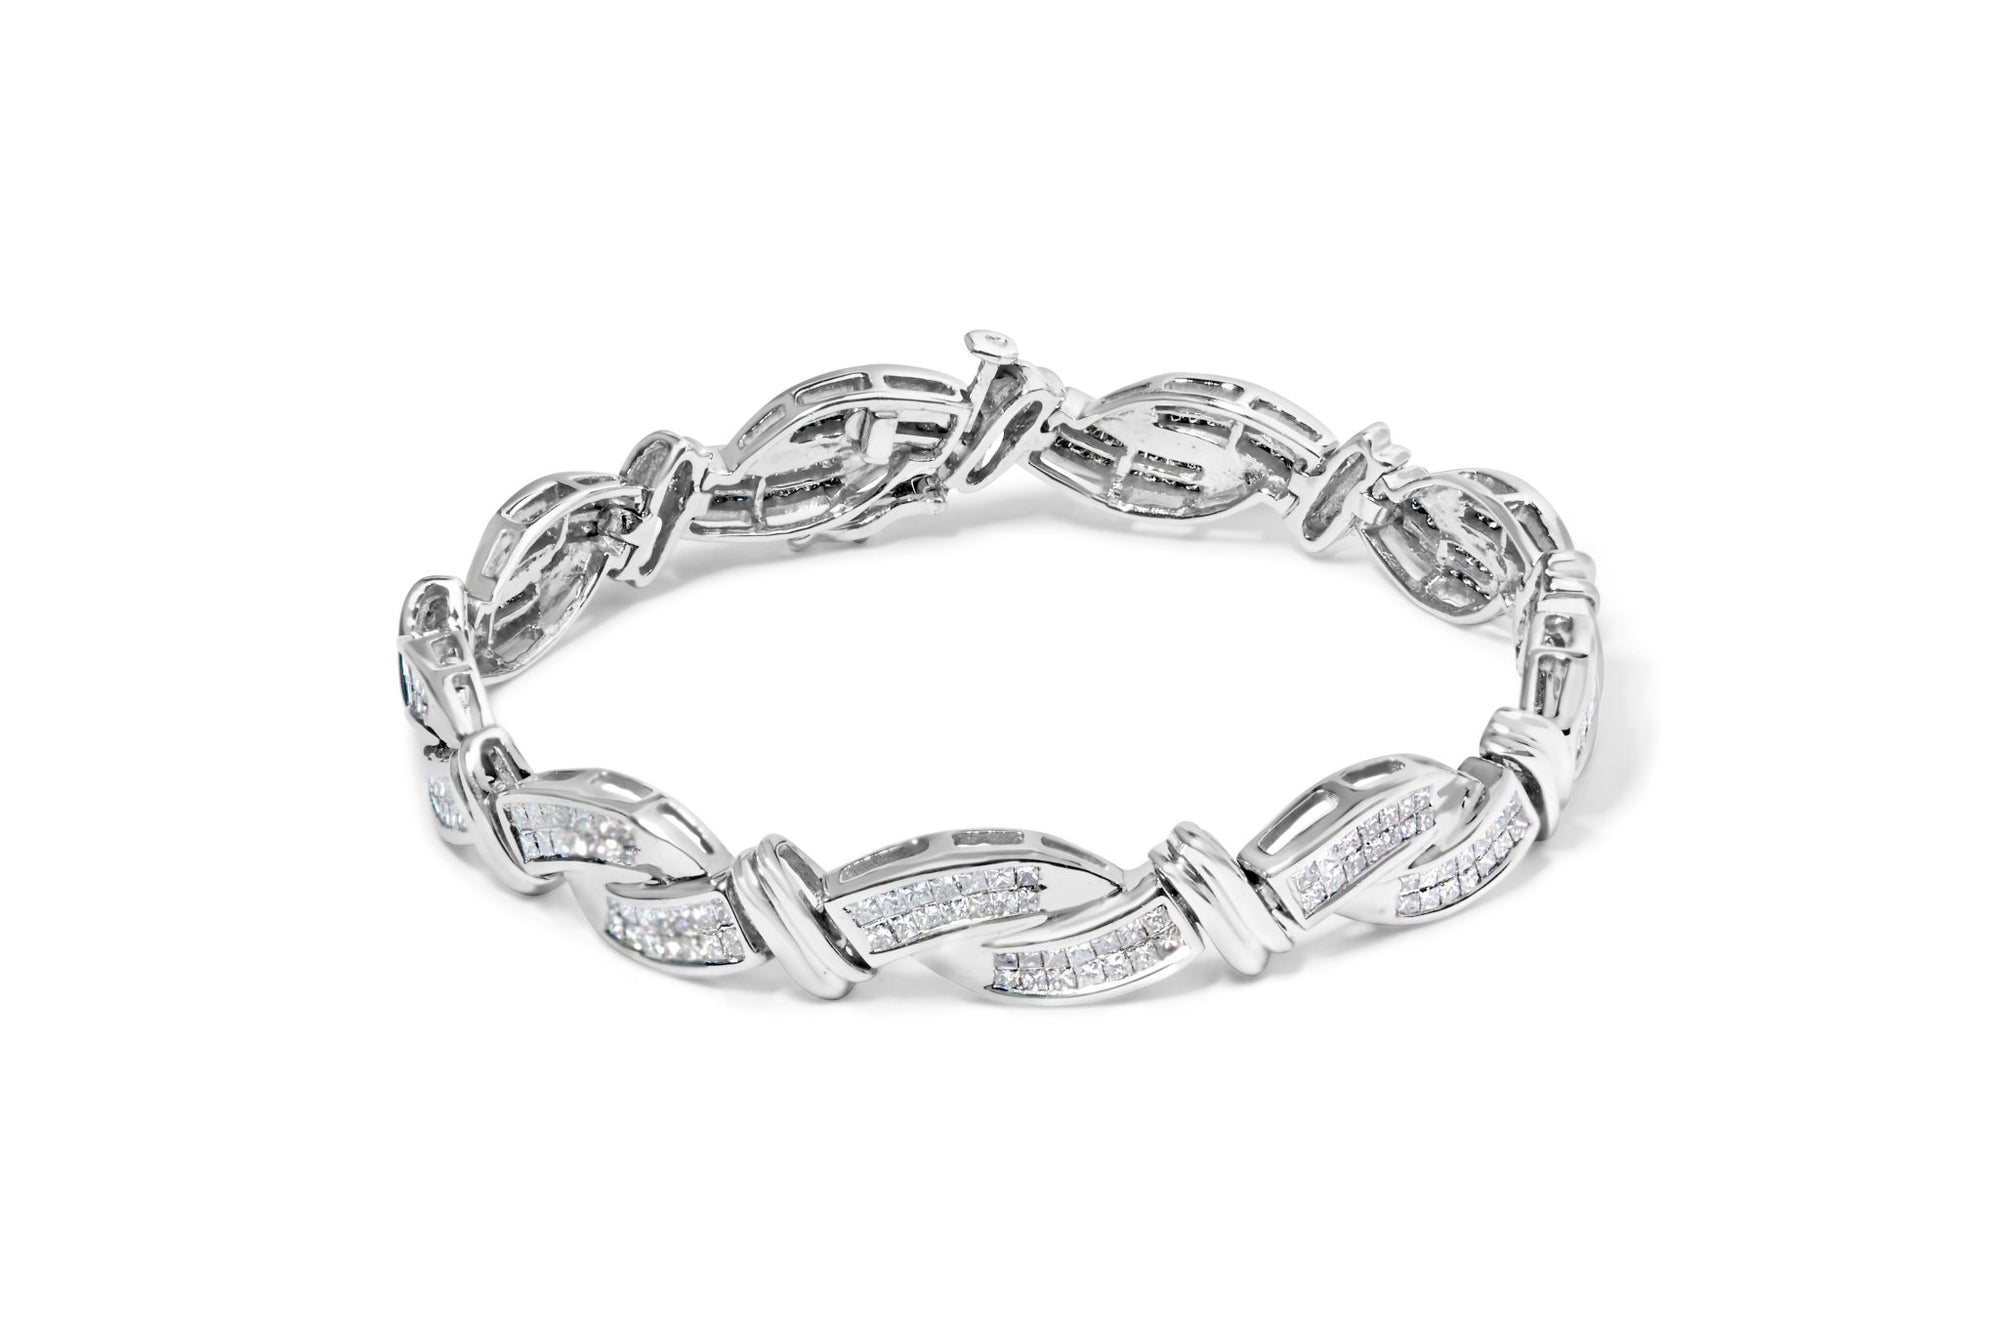 14K White Gold 4.0 Cttw Invisble Set Princess-Cut Diamond Wave Style Link Bracelet (H-I Color, SI2-I1 Clarity) - 7" - LinkagejewelrydesignLinkagejewelrydesign